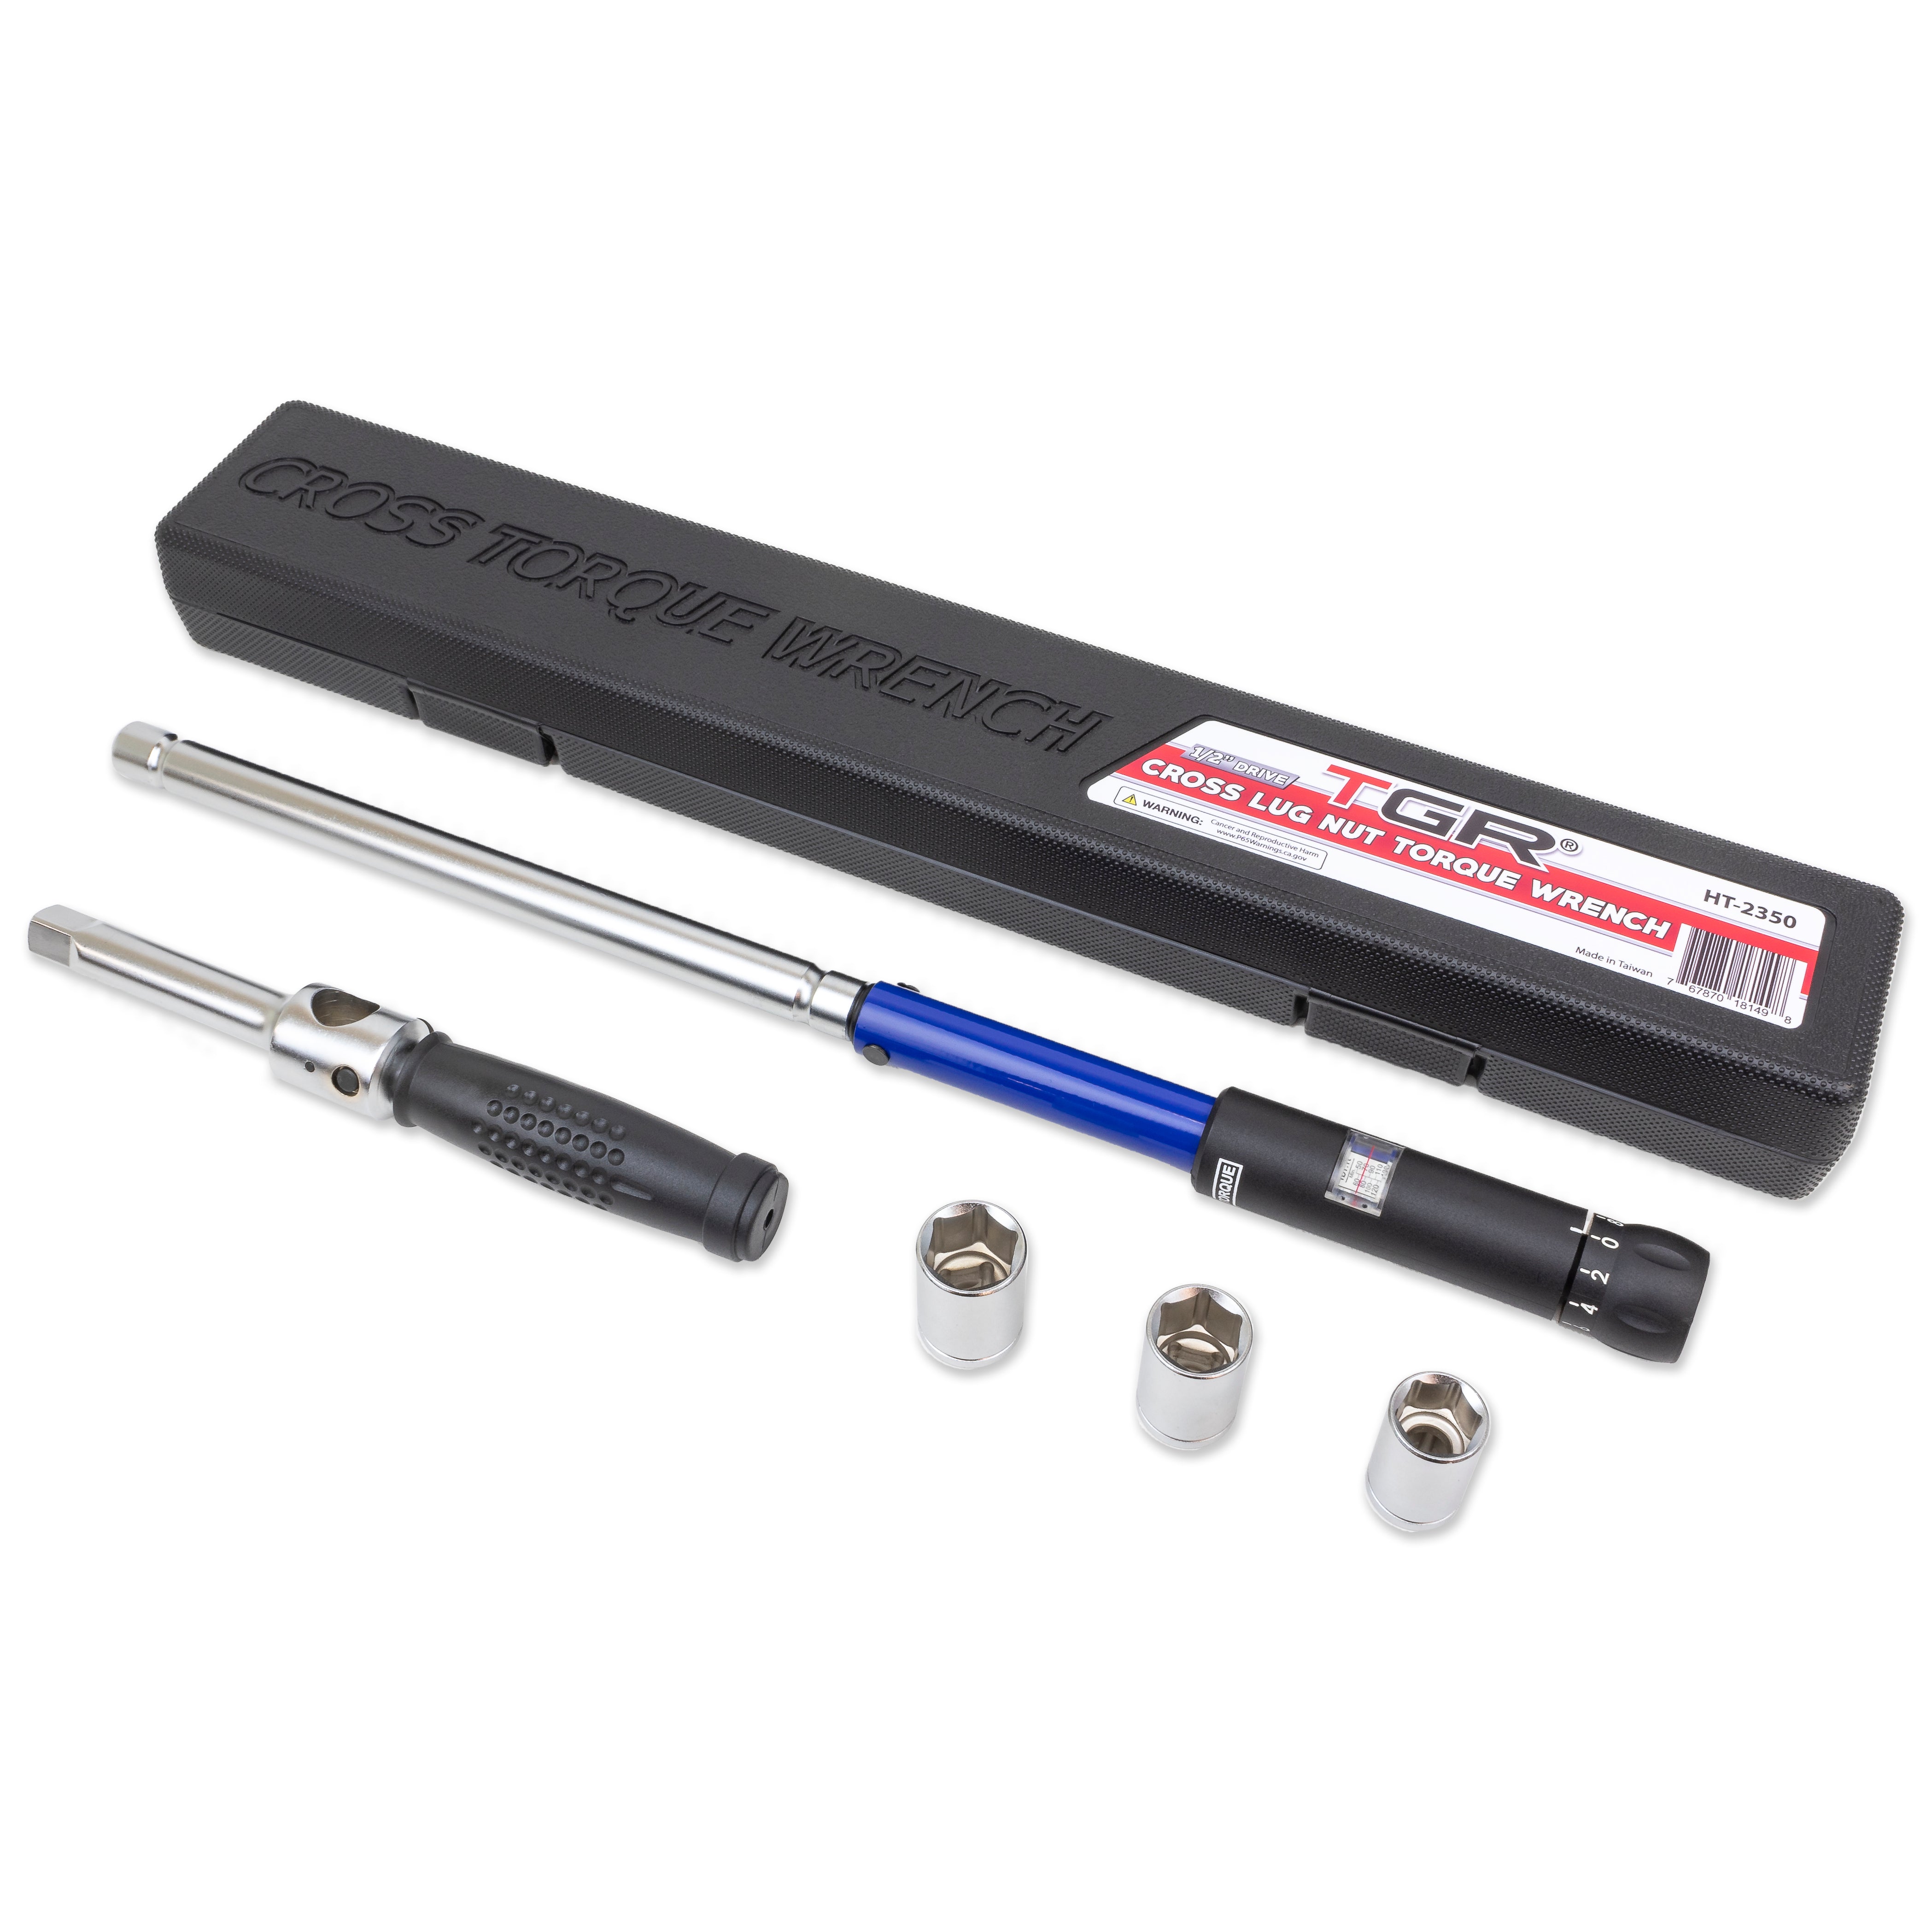 TGR 1/2” Dr Cross Type Lug Nut Torque Wrench 70-170 NM Micro-Adjustment (17, 19, 21 mm Sockets) - Tool Guy Republic